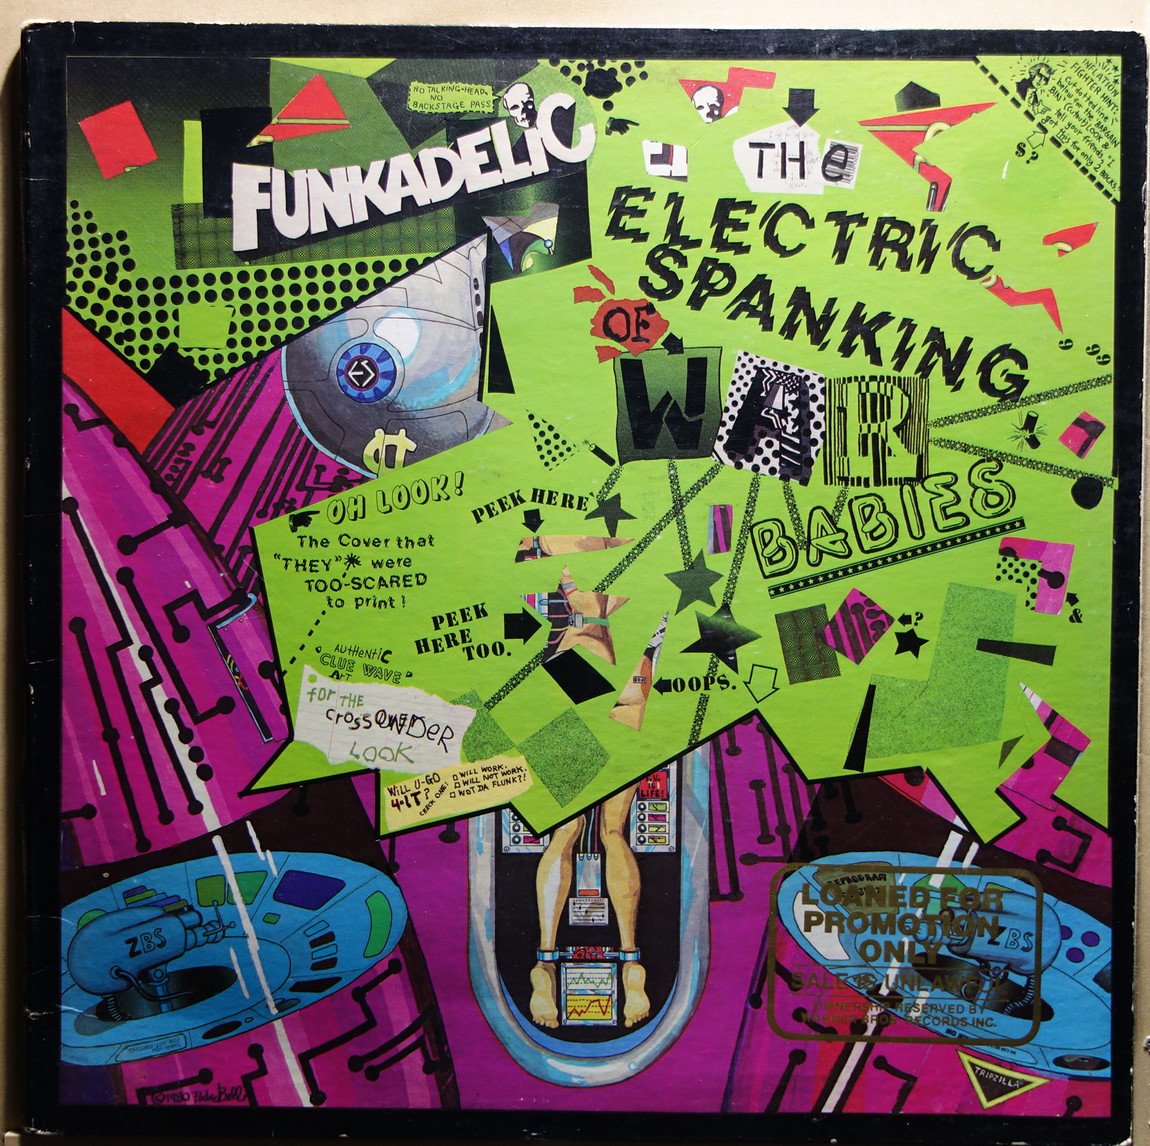 Funkadelic - The Electric Spanking Of War Babies - Vinylian - Vintage Vinyl  Record Shop